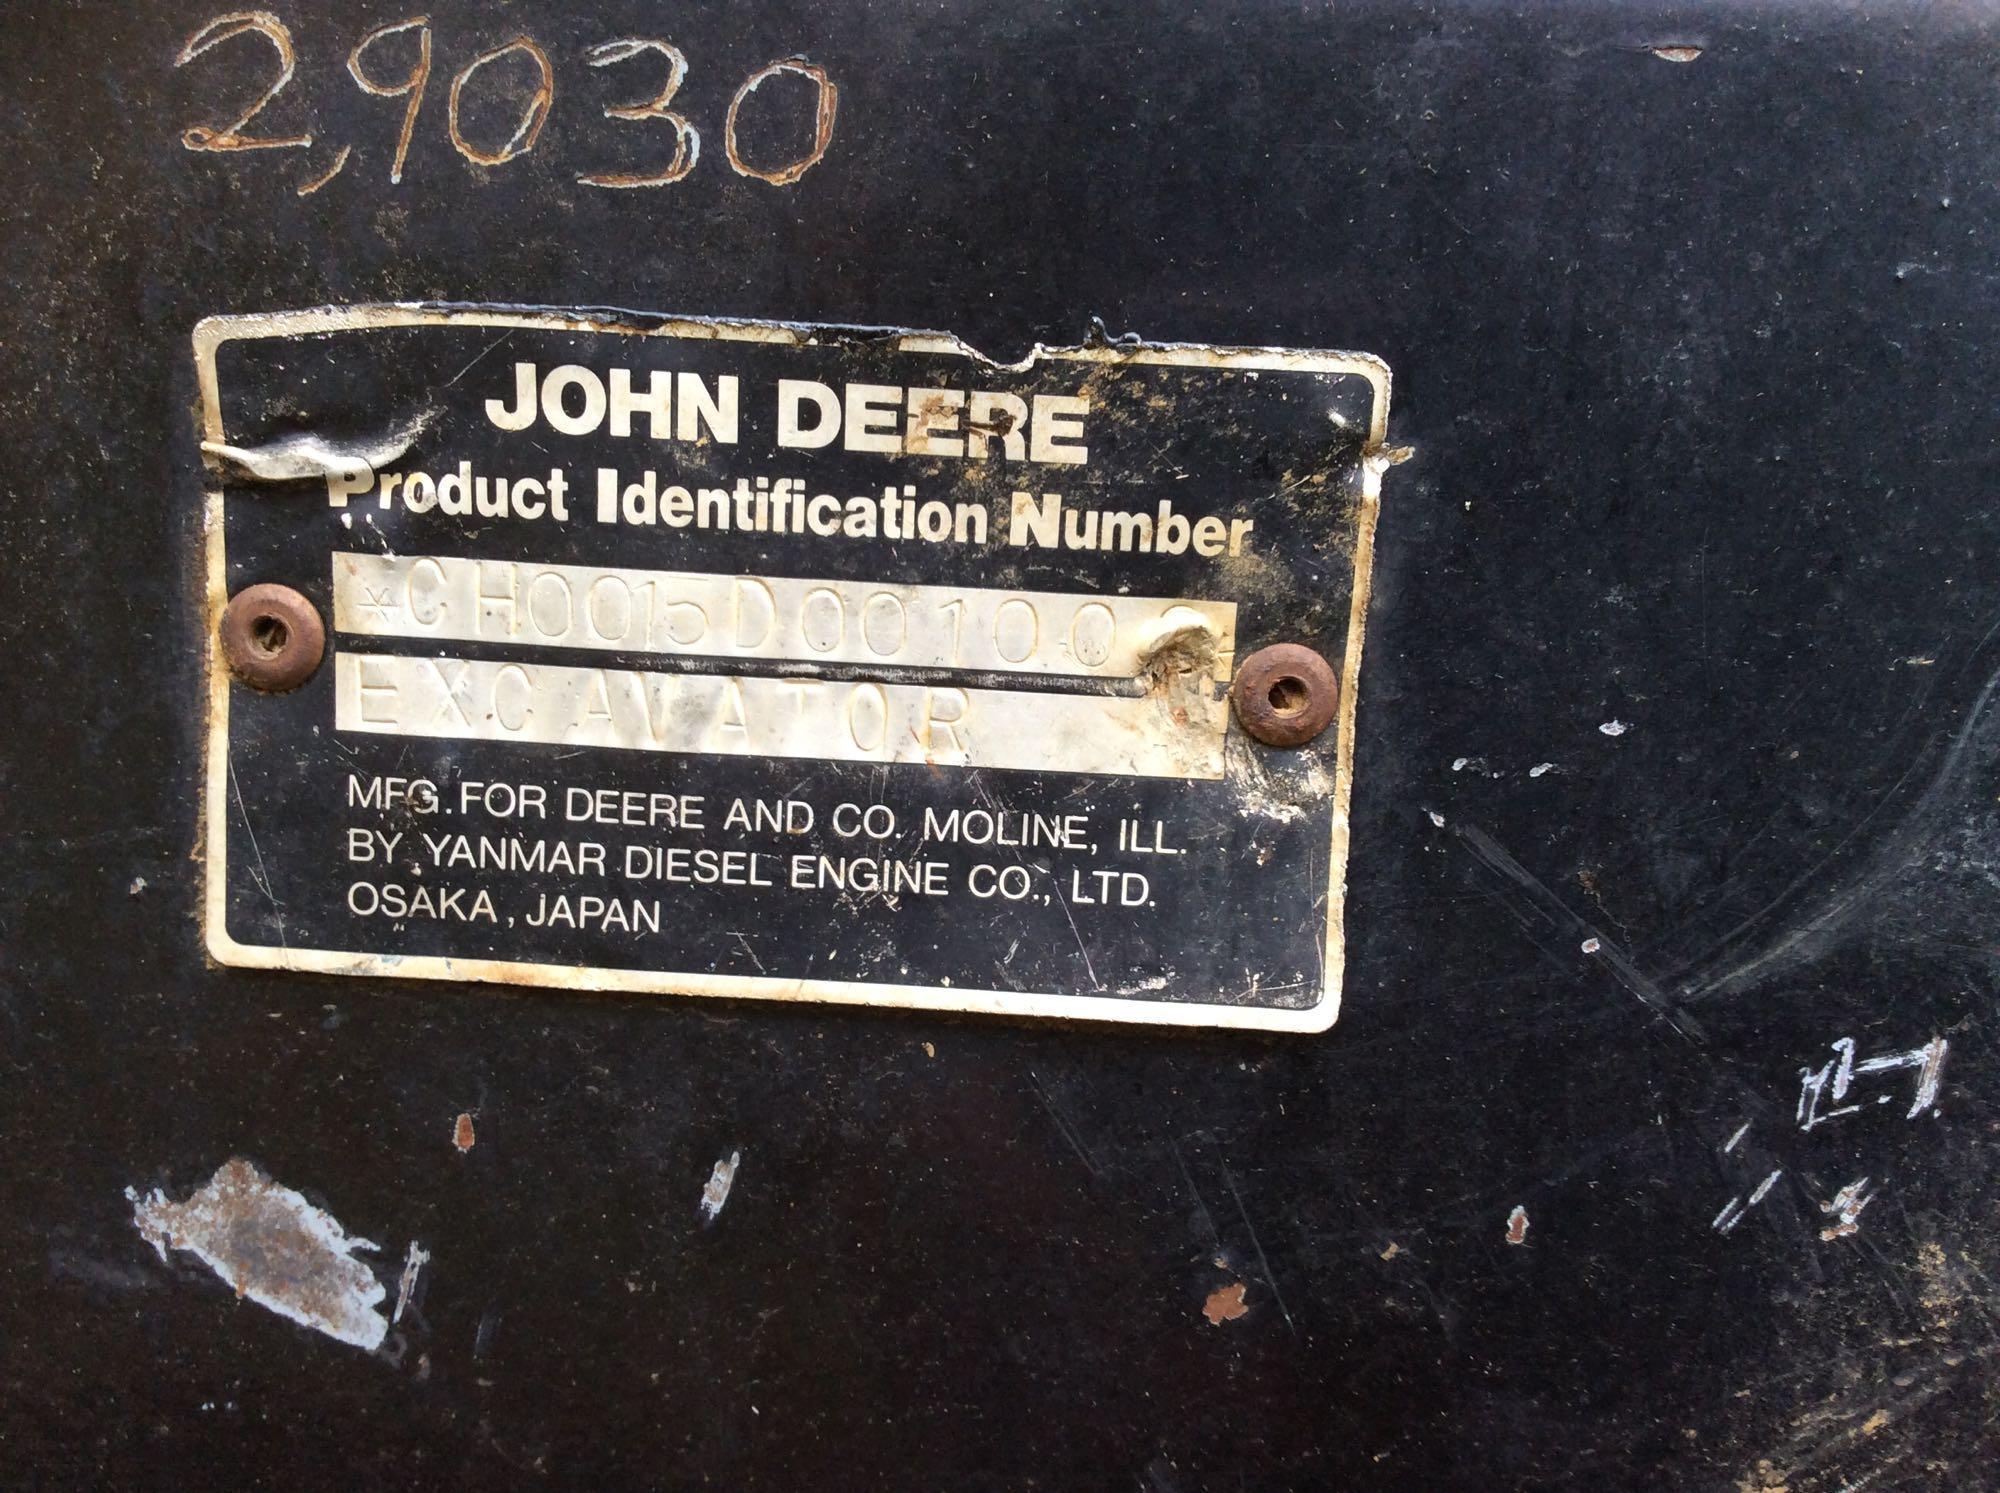 John Deere 15 mini excavator with steel tracks and 15 in bucket